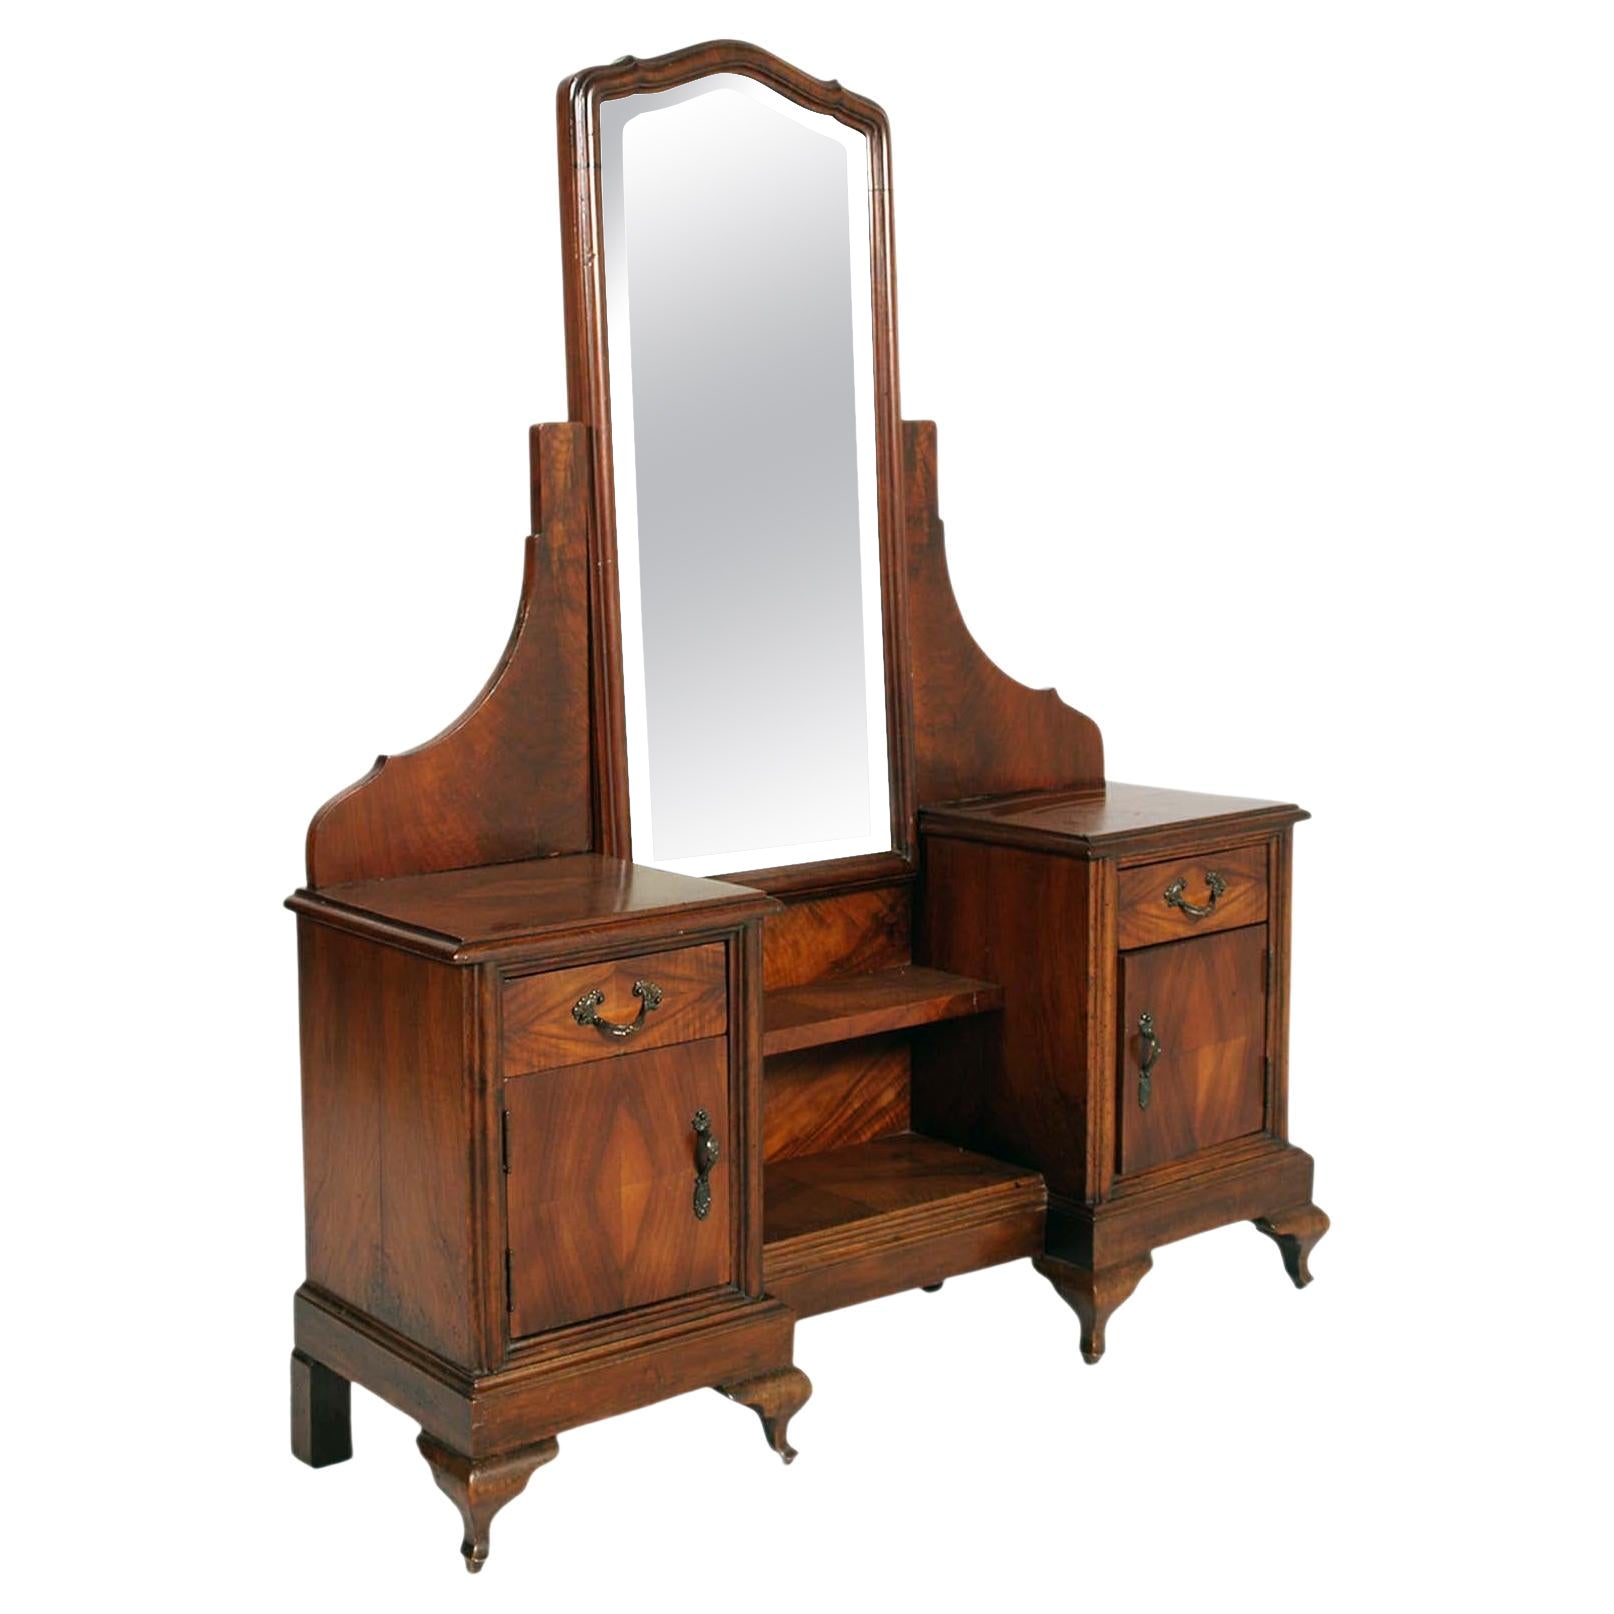 Early 20th C. Italian Art Nouveau Vanity in Walnut, Entry Mirror, Wax Polished